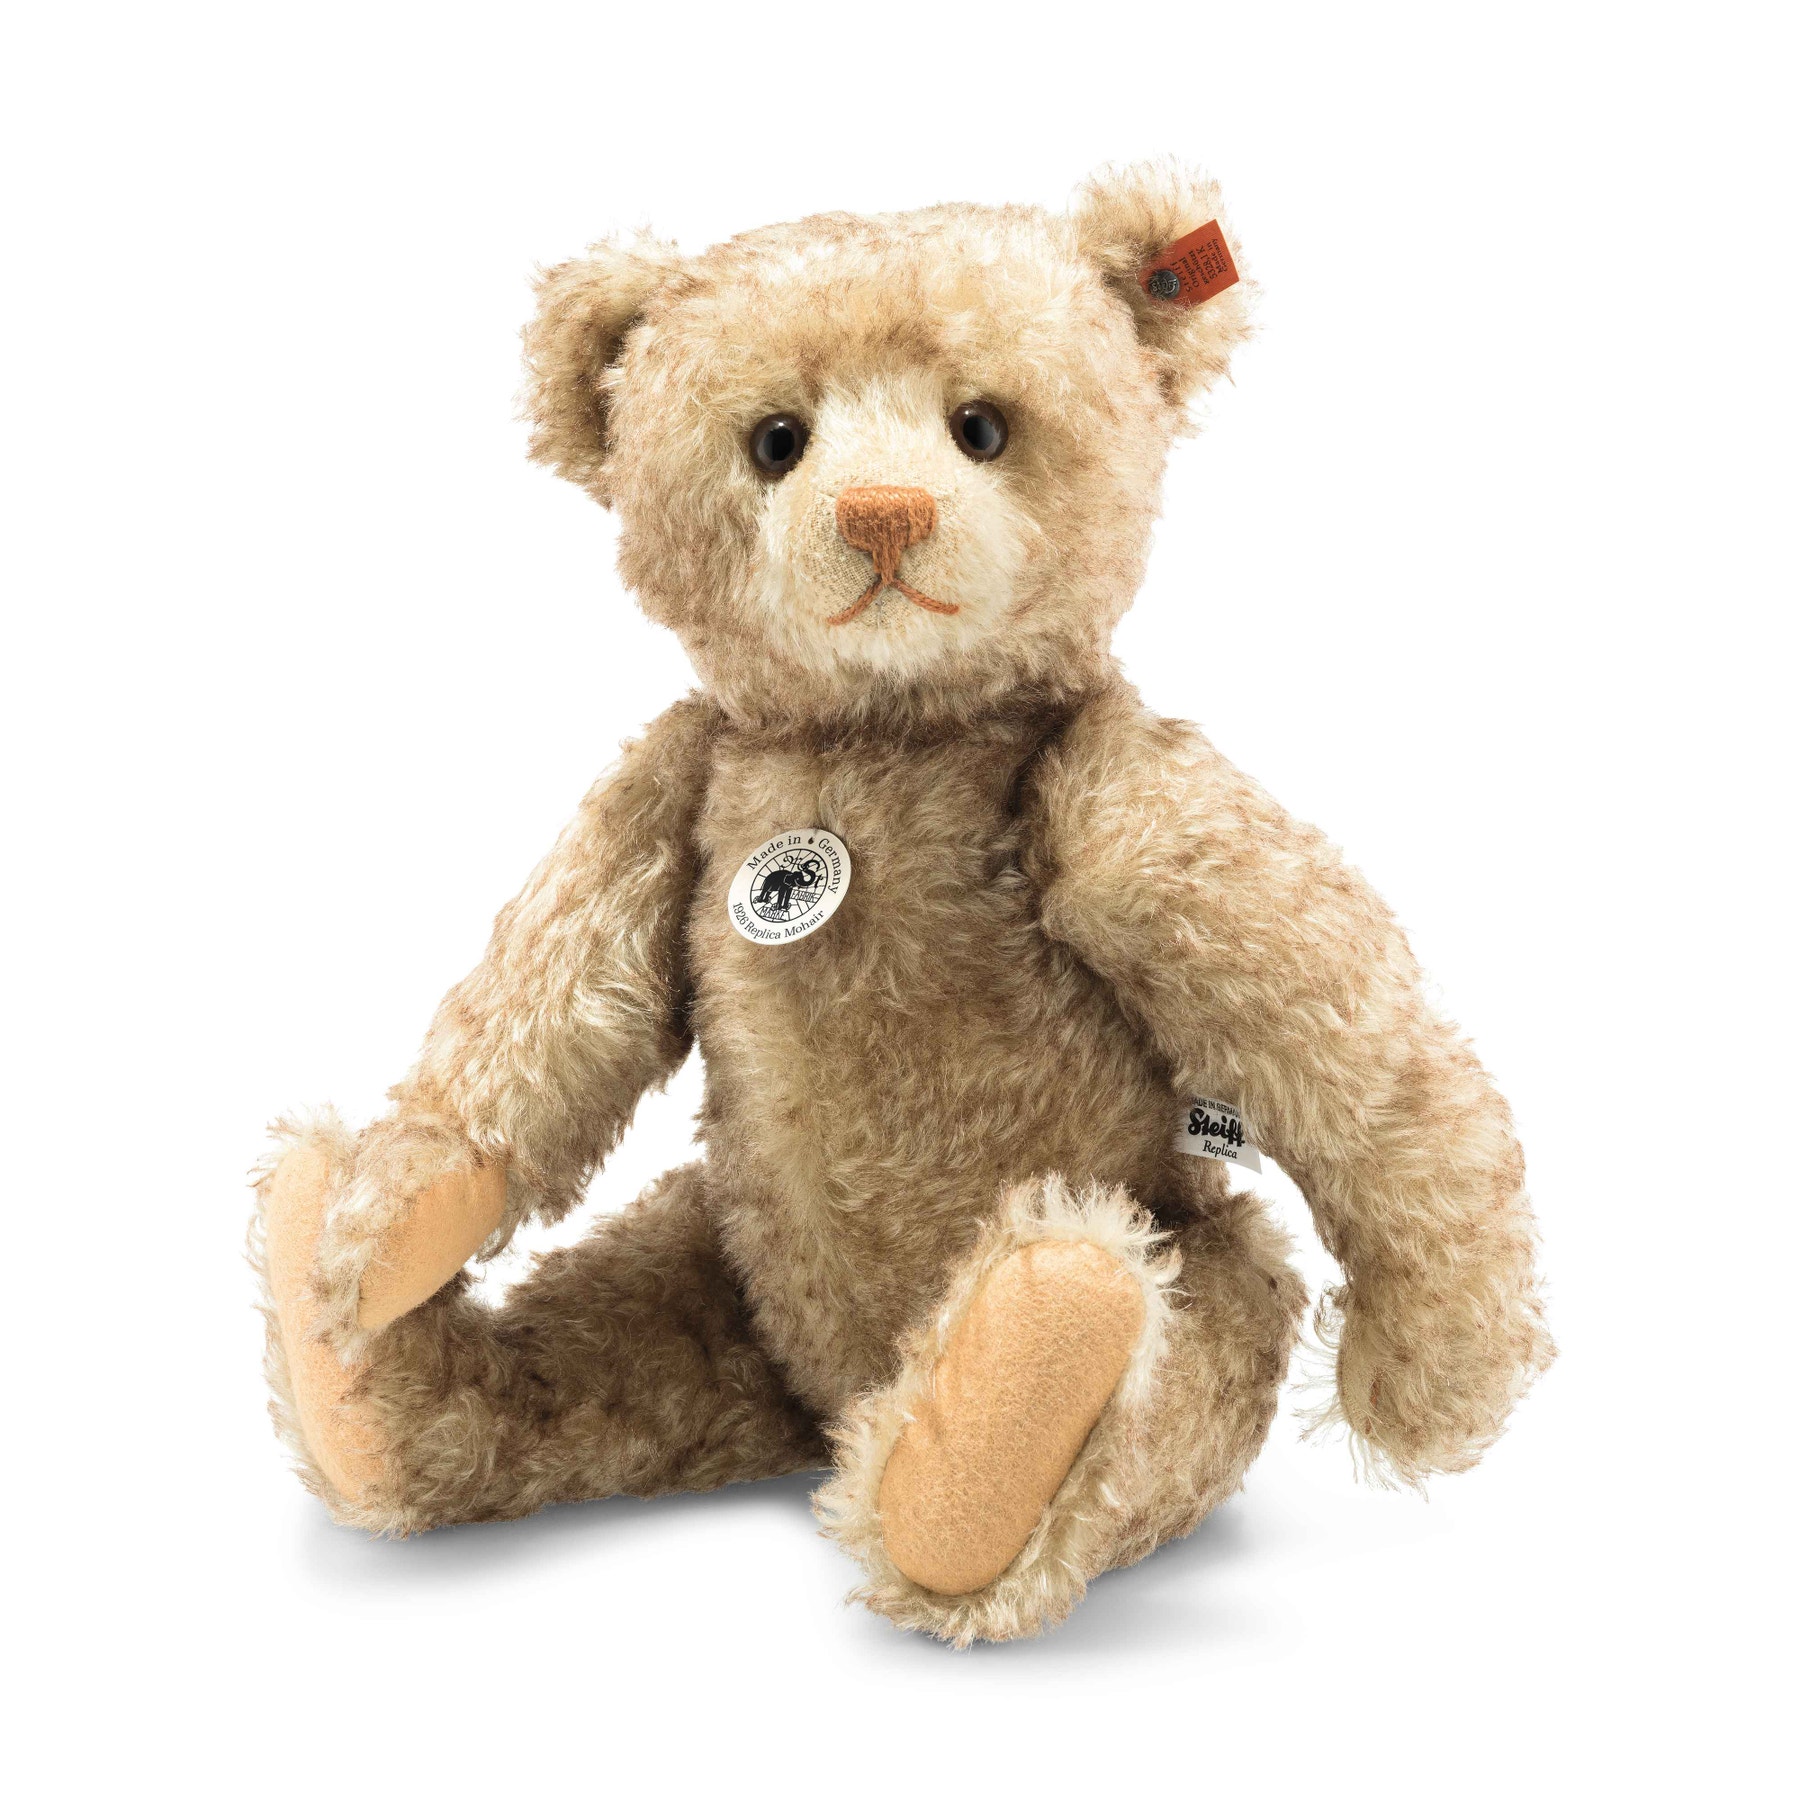 Teddy bear replica 1926